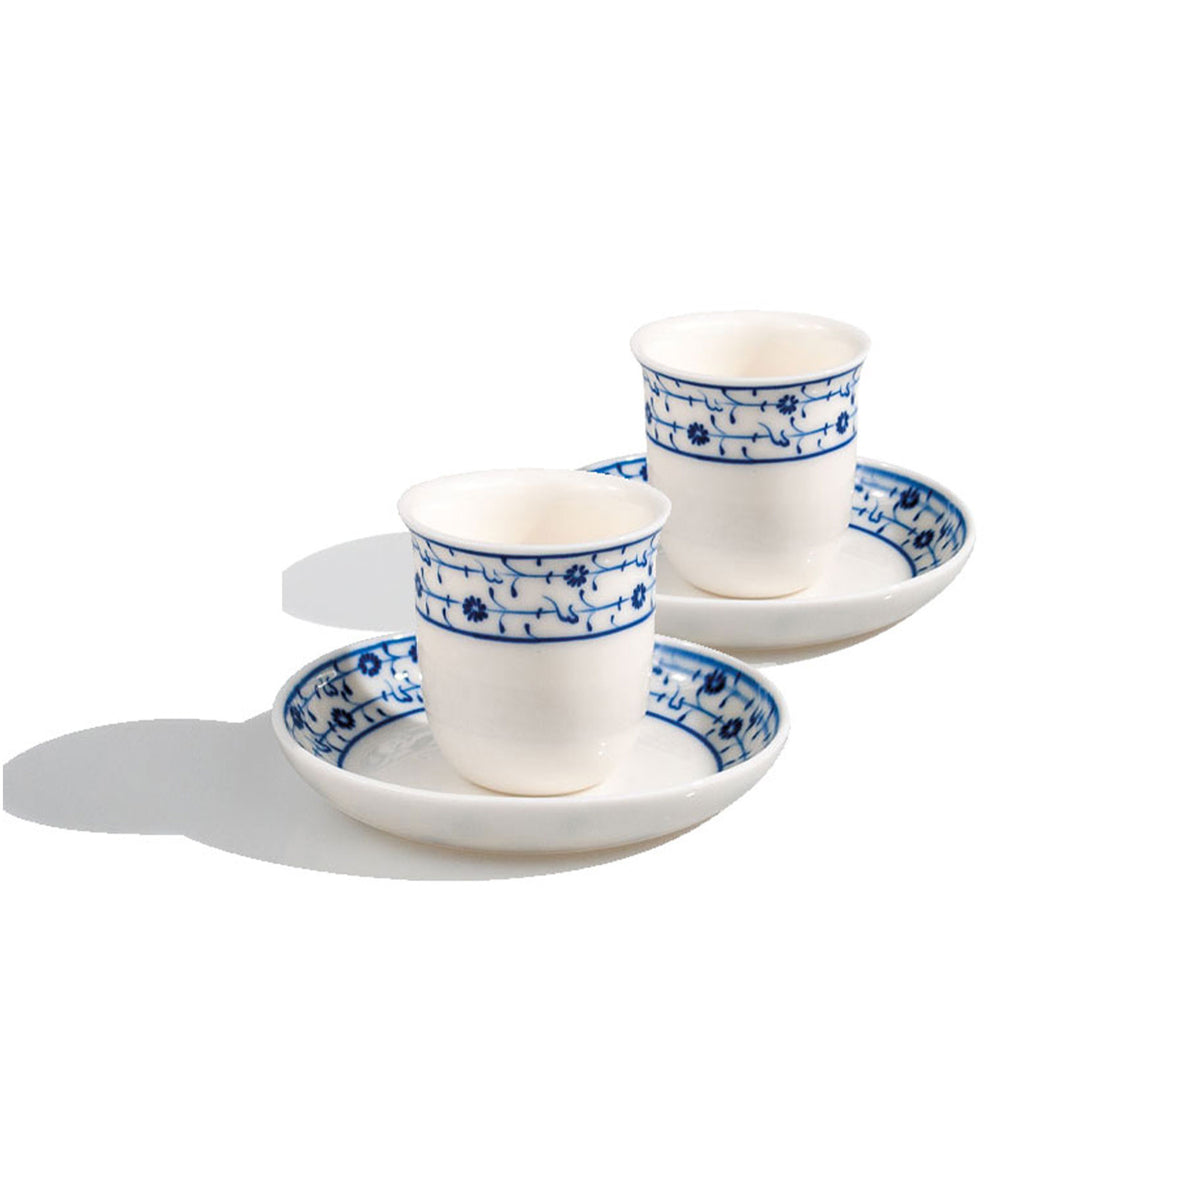 Golden horn pattern blue-white transparent turkish coffee porcelain cup set.